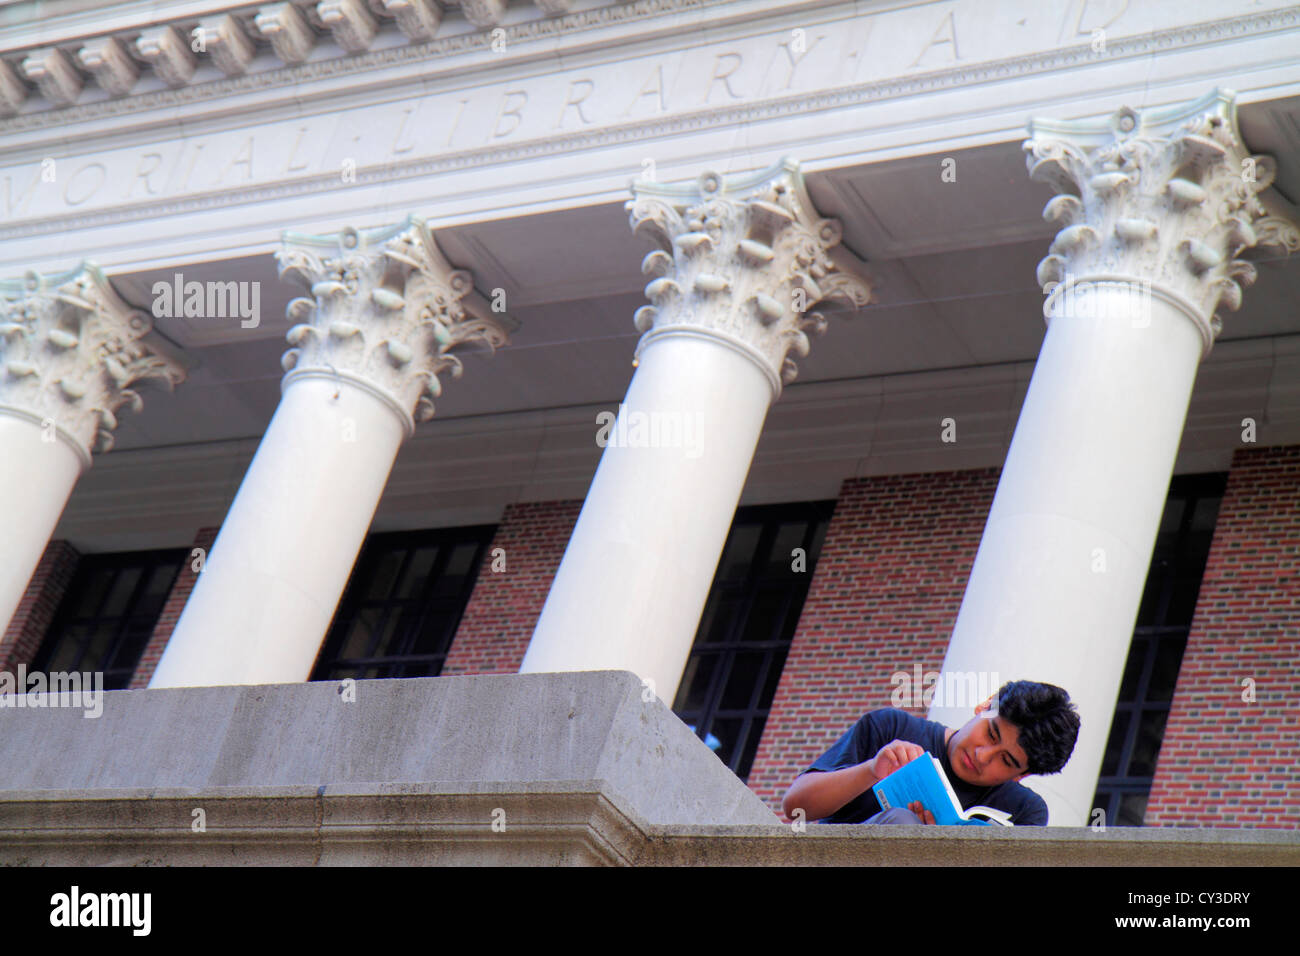 Cambridge Massachusetts,Boston Harvard University,campus,hombres asiáticos adultos adultos masculinos,estudiantes sentados,Biblioteca Widener,frente,entrada,colum Foto de stock